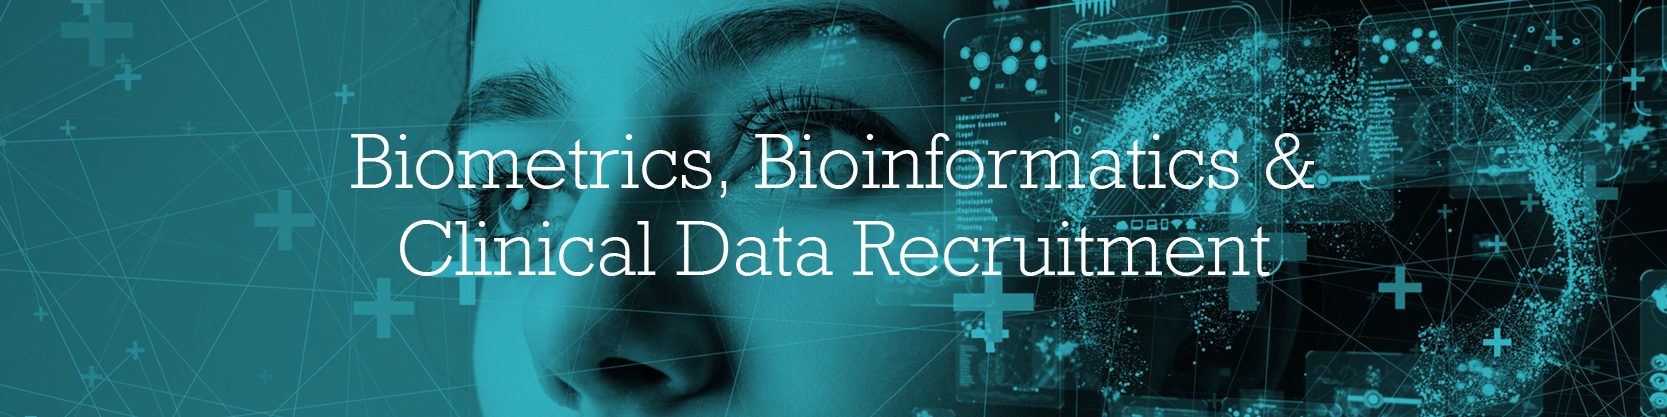 Biometrics, Bioinformatics, Clinical Data Recruitment